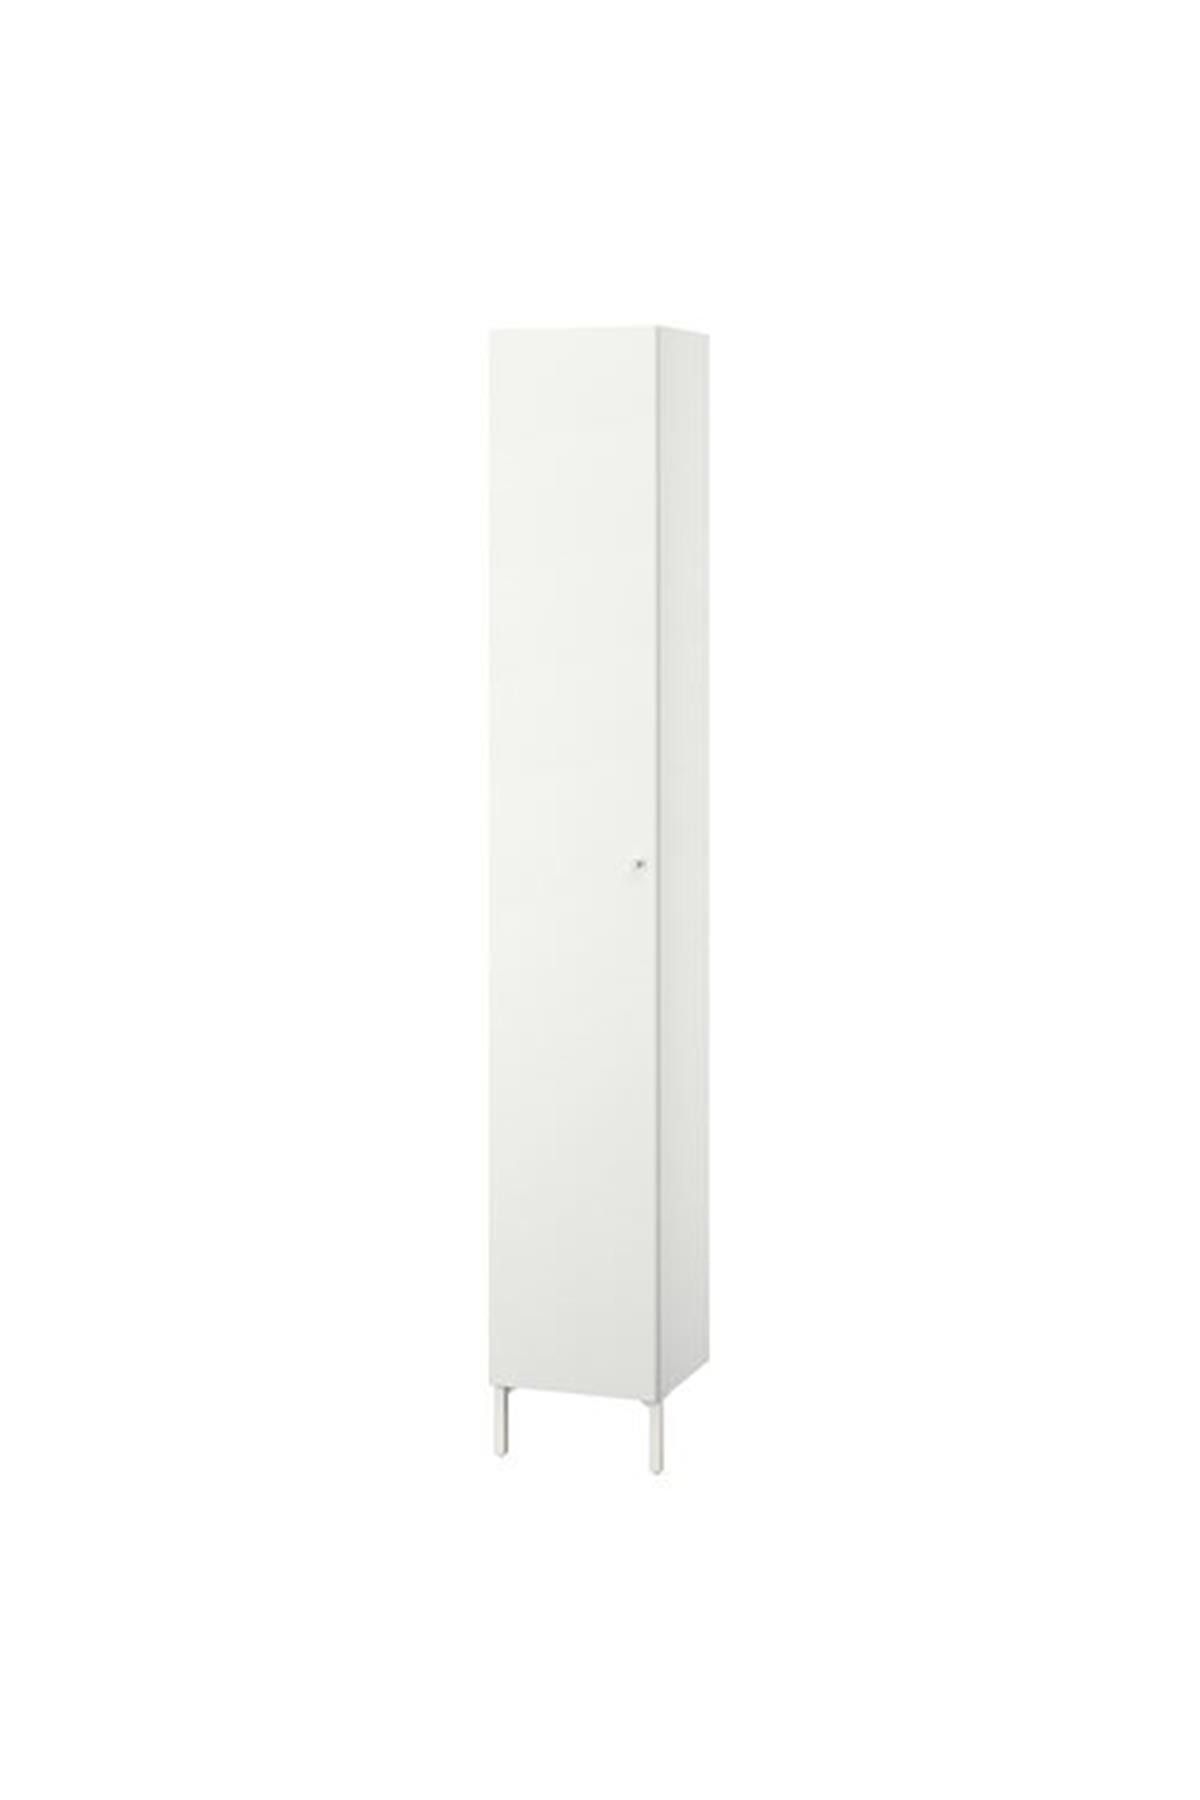 IKEA Nysjön Yüksek Banyo Dolabı 30x190 Cm Beyaz Renk